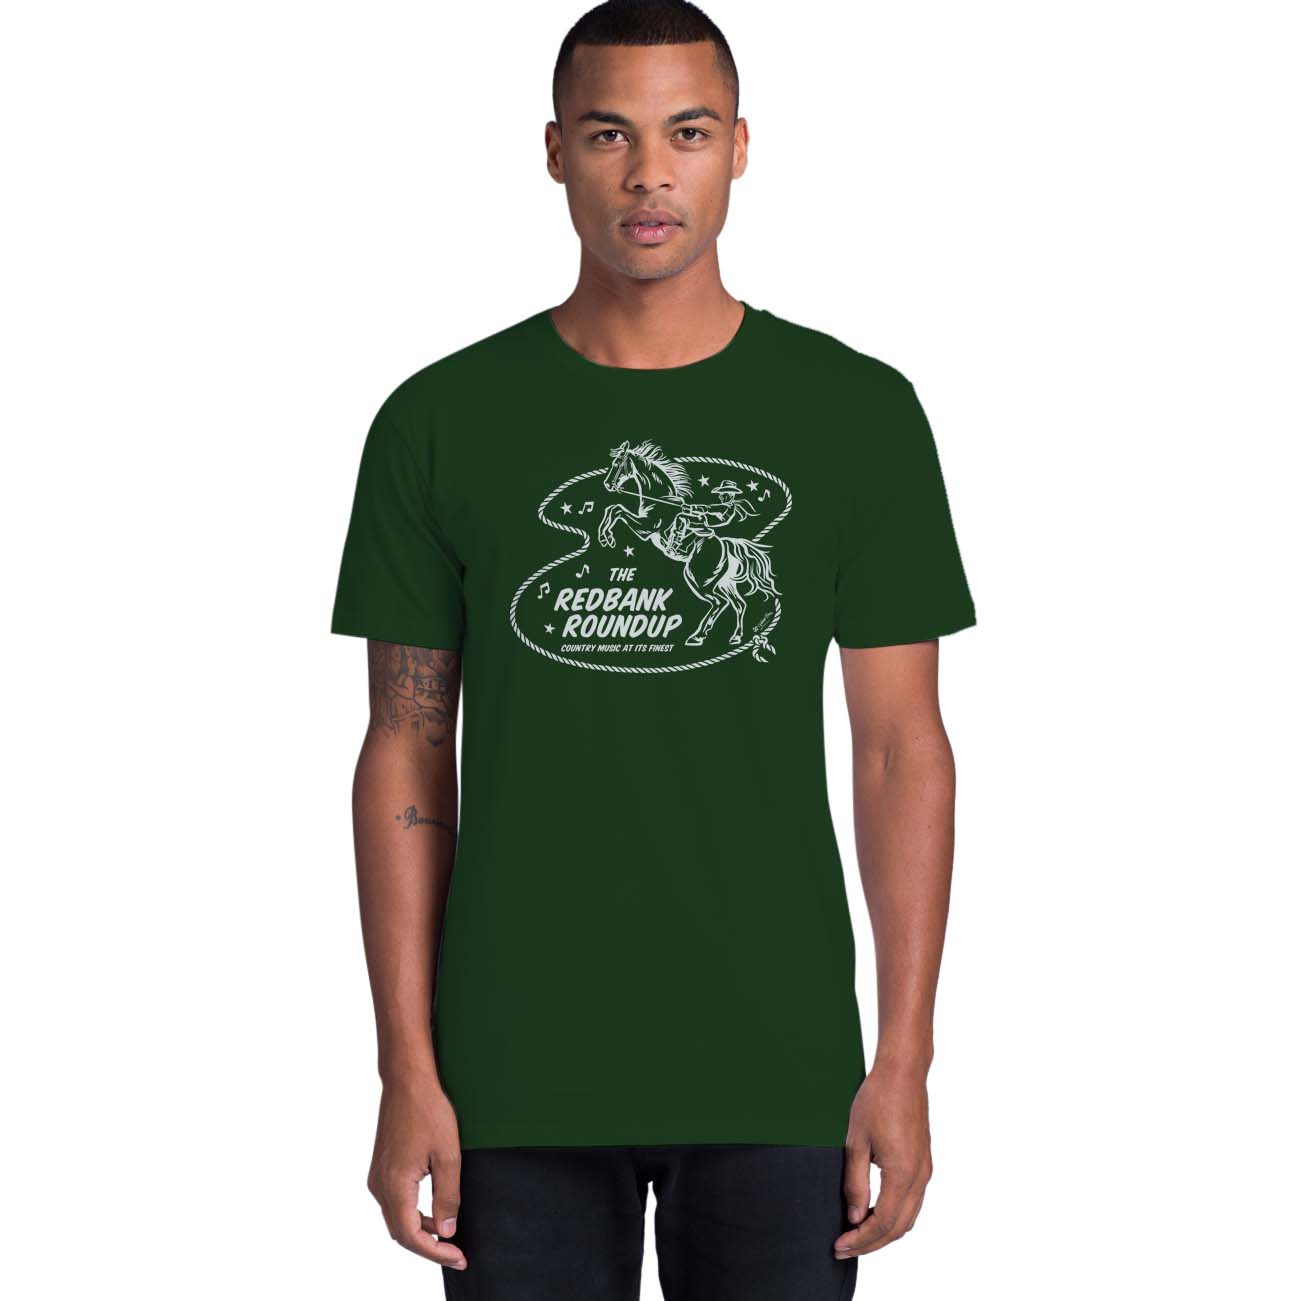 Redbank Roundup - Unisex T-Shirt